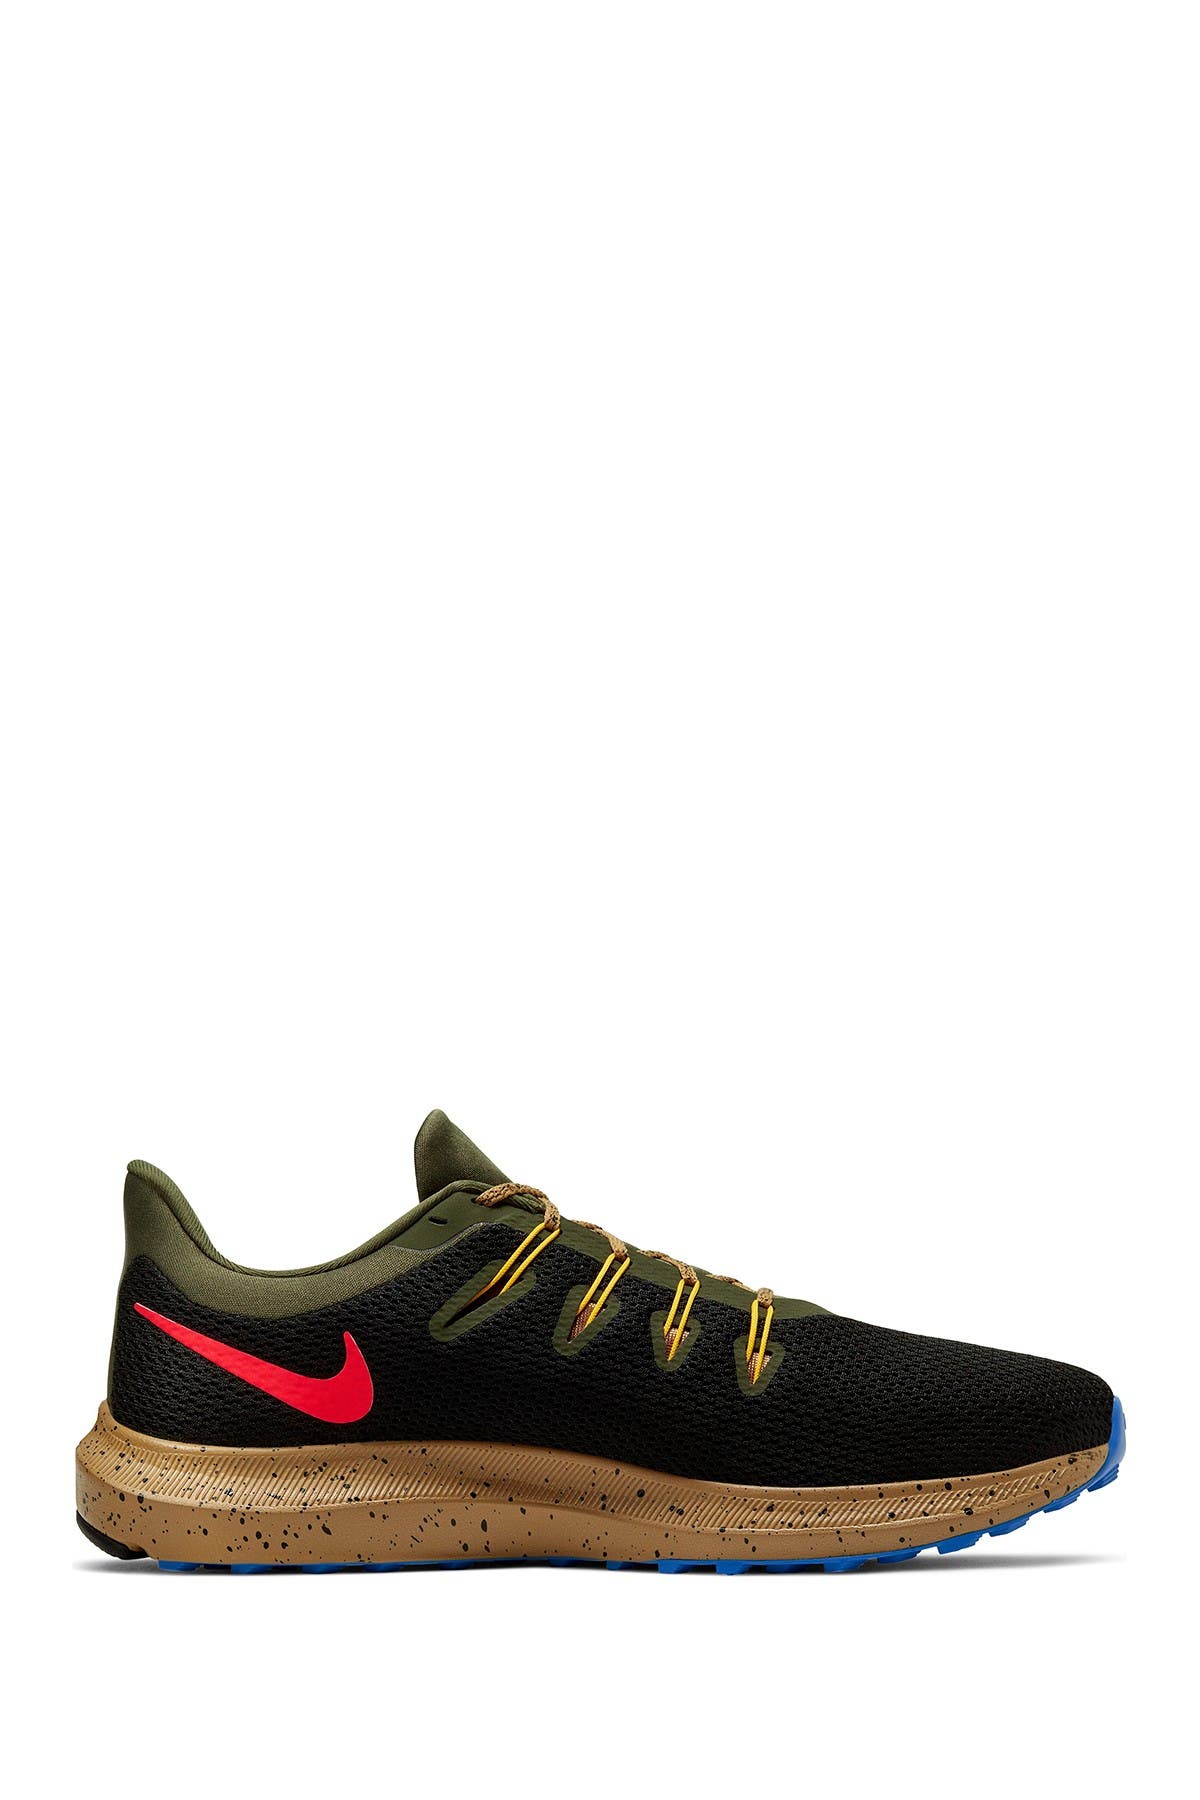 Nike | Quest 2 SE Running Shoe 